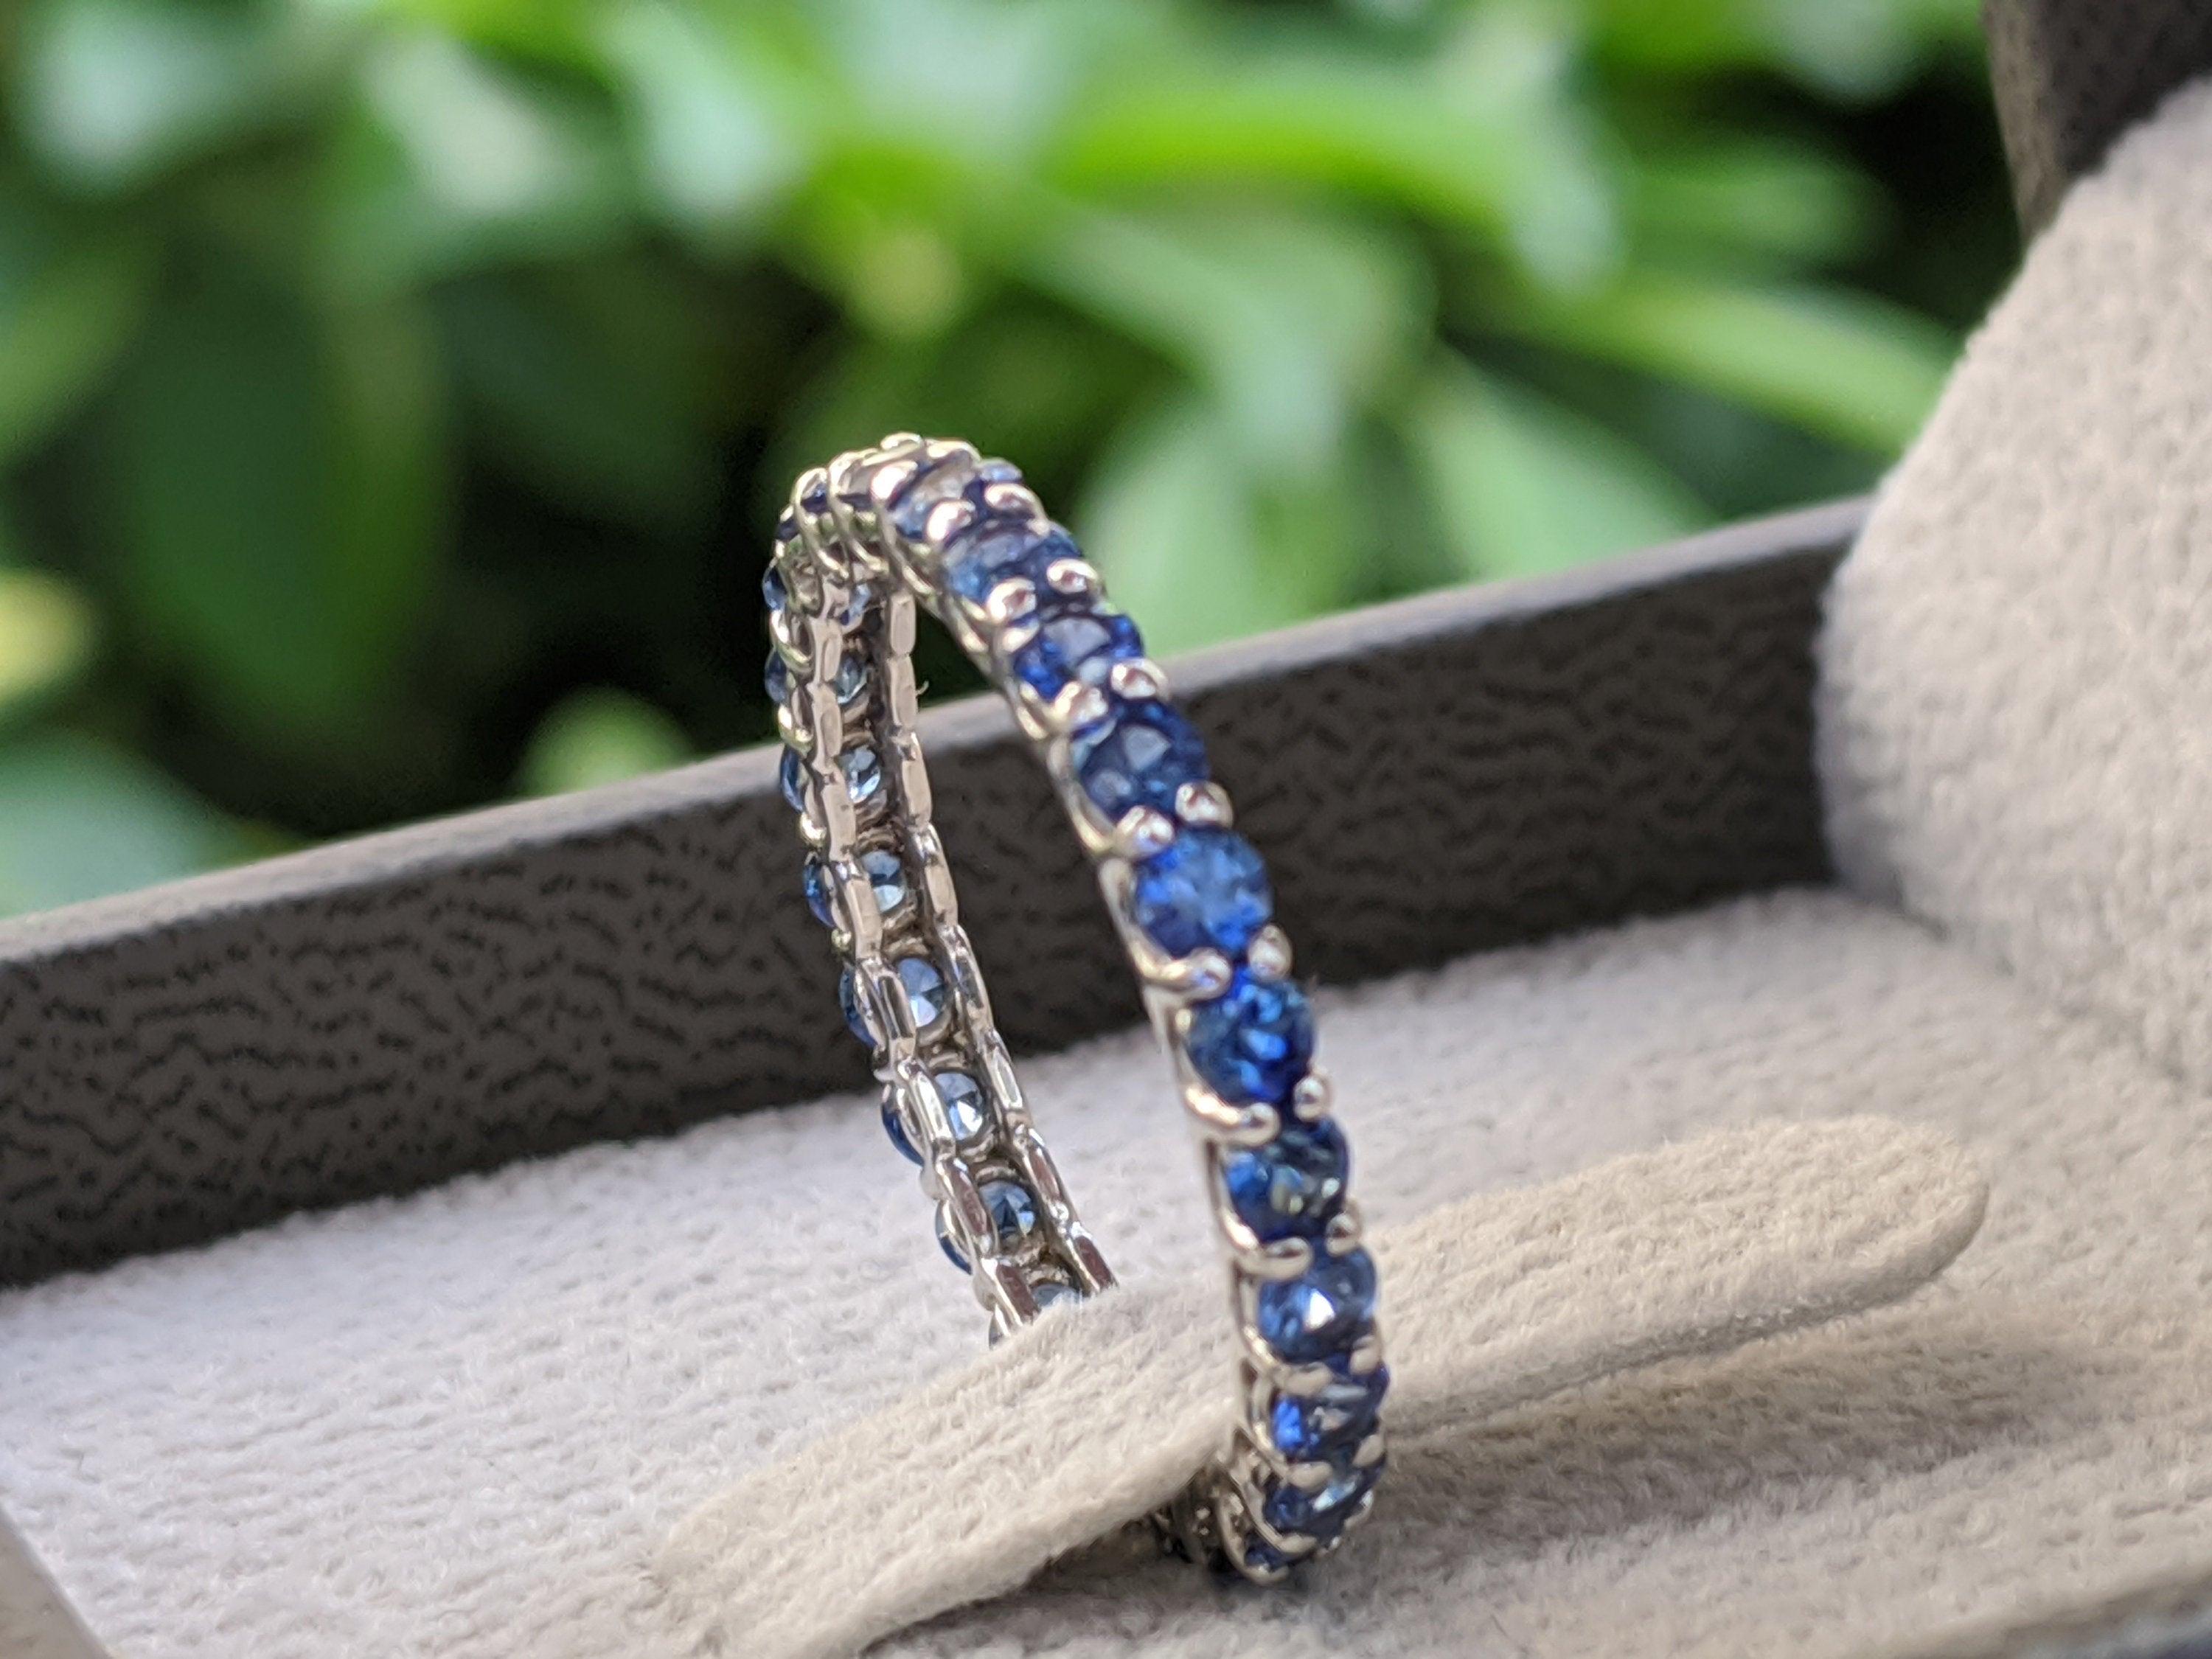 1.70 Carat Sapphire Band, Blue Sapphire Eternity Band, Natural Sapphire Ring, White Gold Sapphire Ring, Anniversary Present, Gift
 
 Main Stone Name: Natural Sapphire
 Main Stone Weight: 1.70cttw
 Main Stone Color: Blue